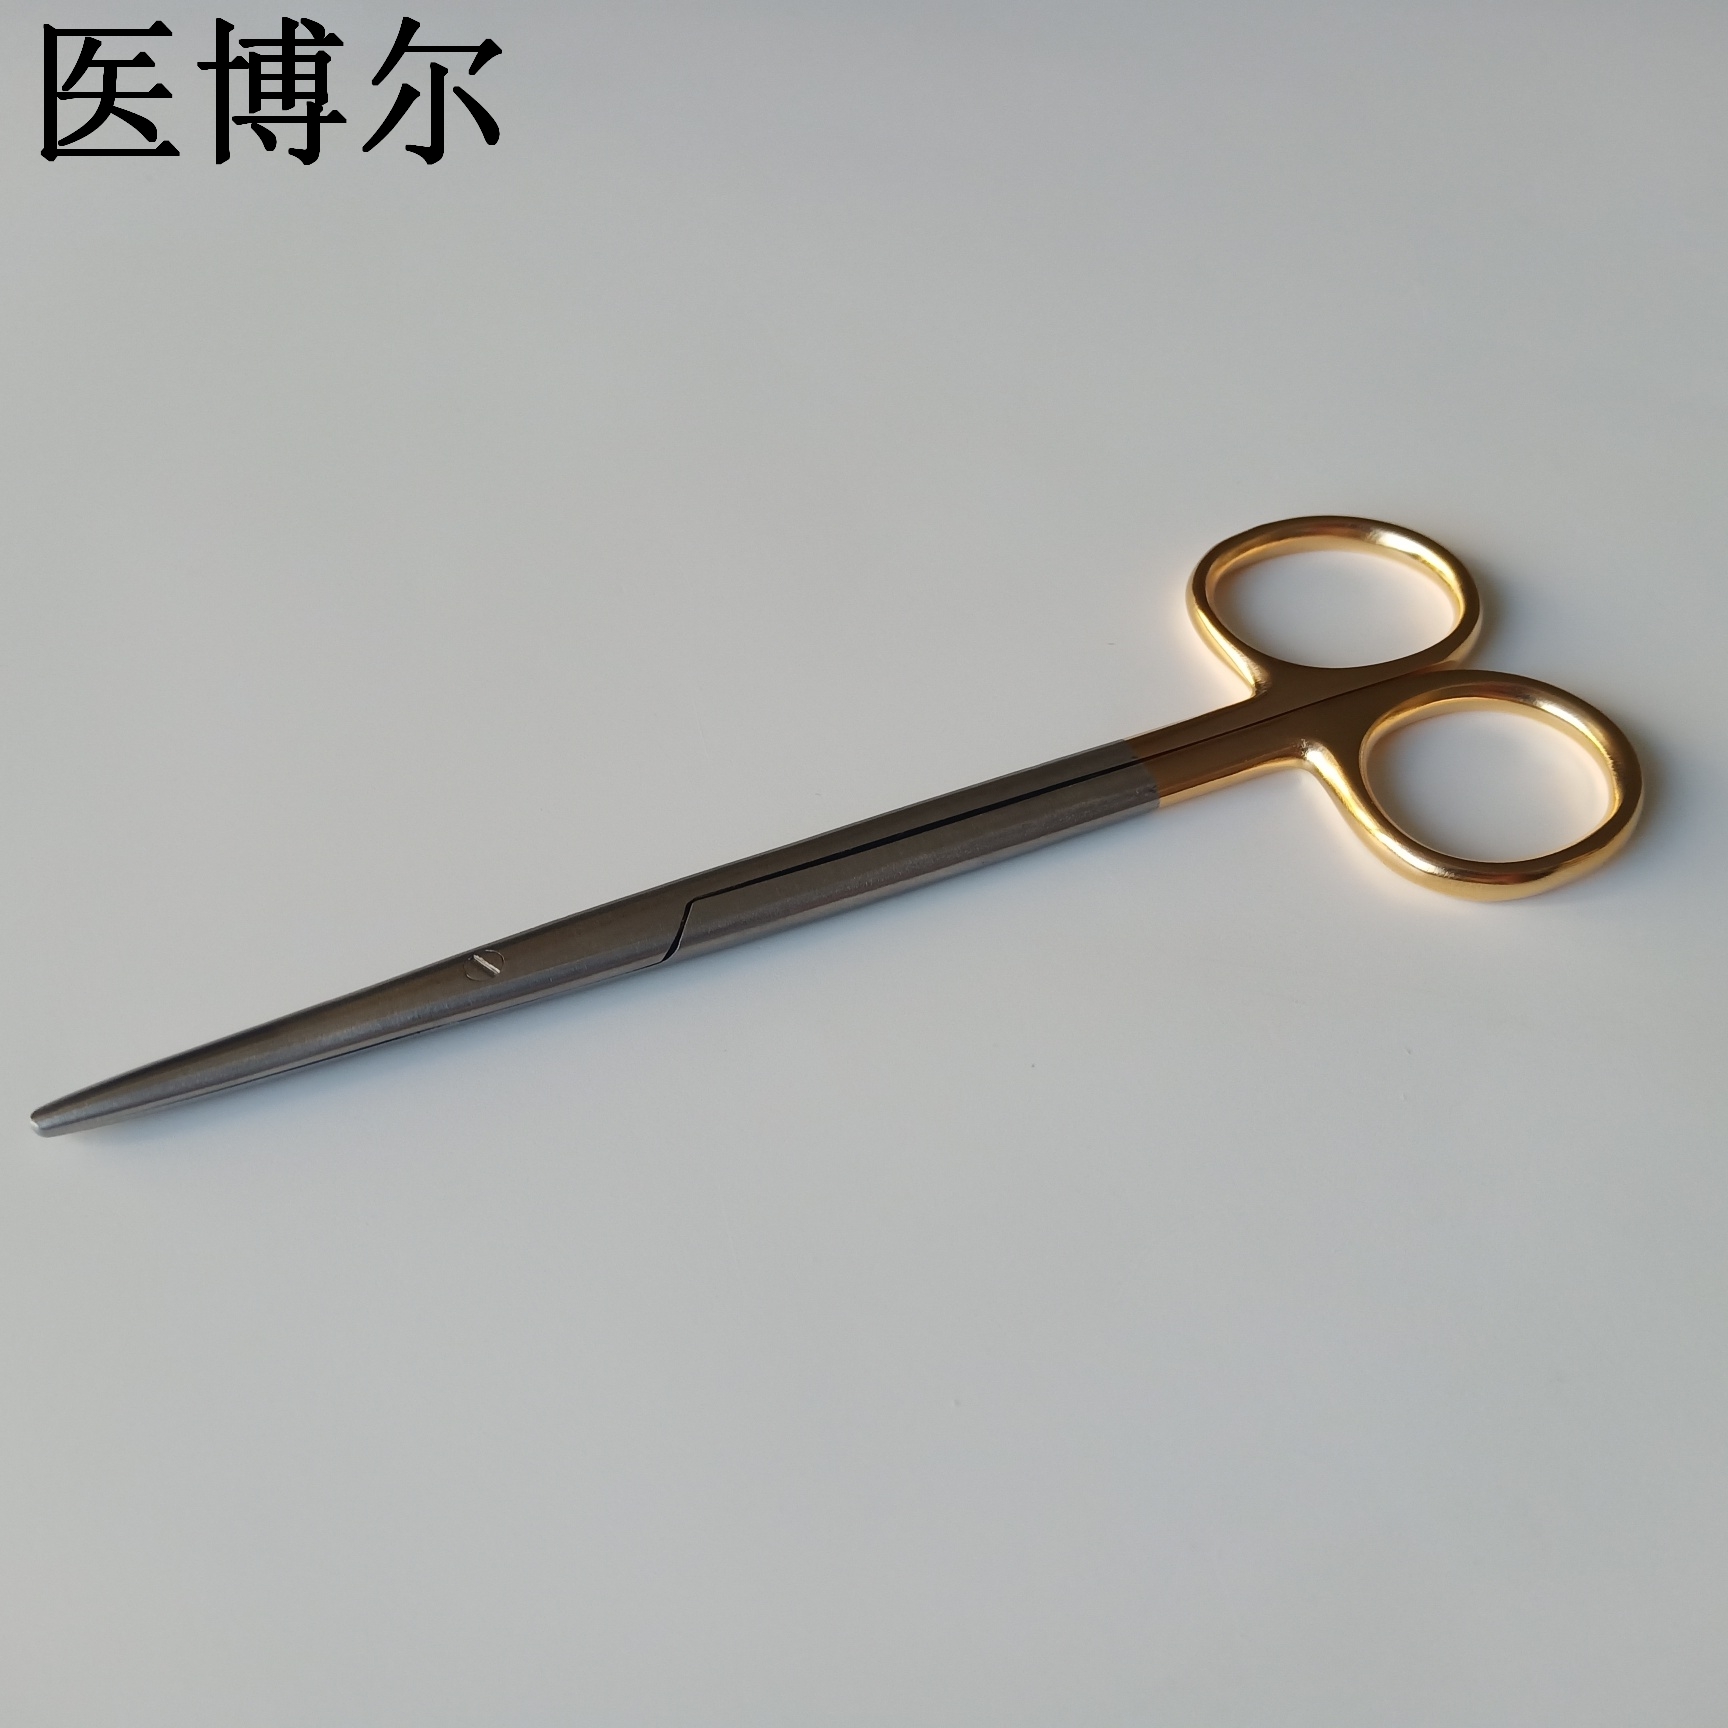 14cm精细直圆剪刀 (4).jpg